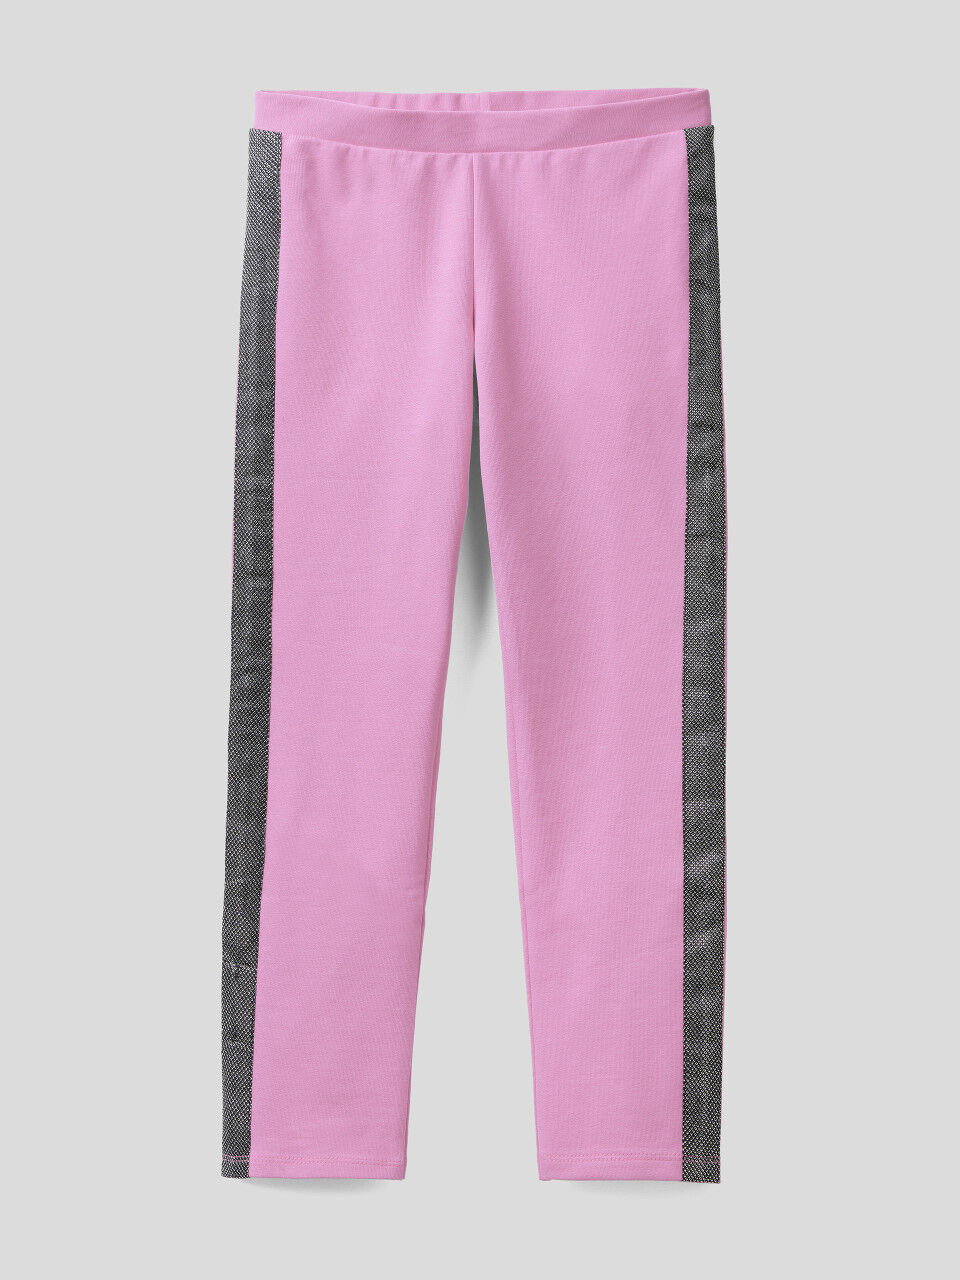 Gymboree Posh & Playful Pink Pull on Pants Elastic Waist Size  3T 5T New 